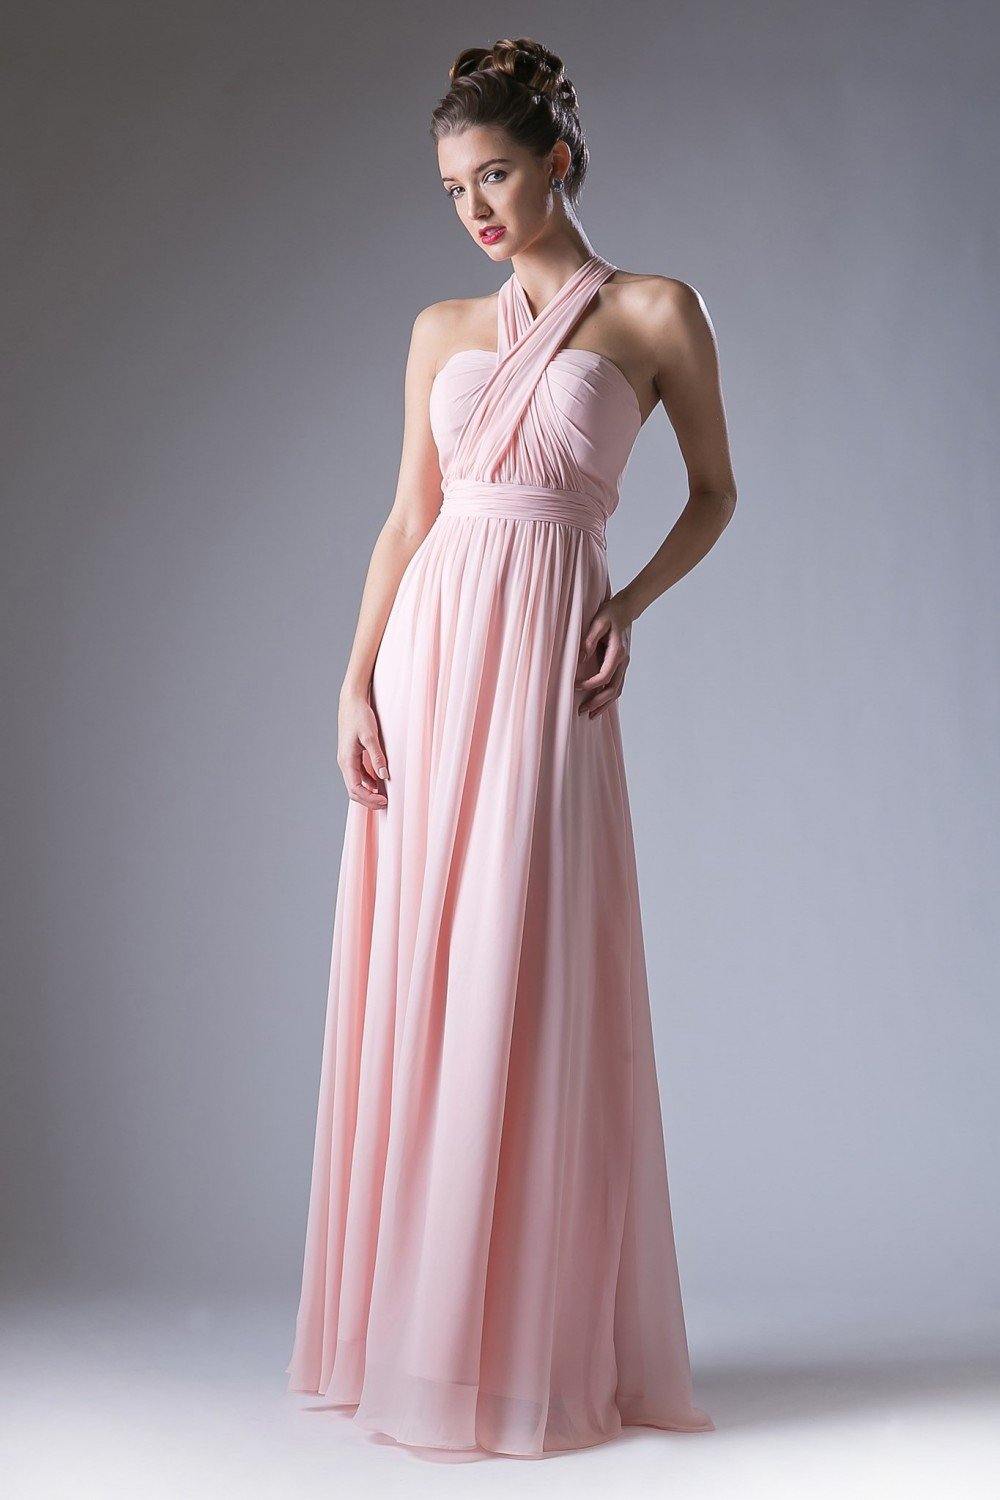 Formal Long Dress Bridesmid - The Dress Outlet